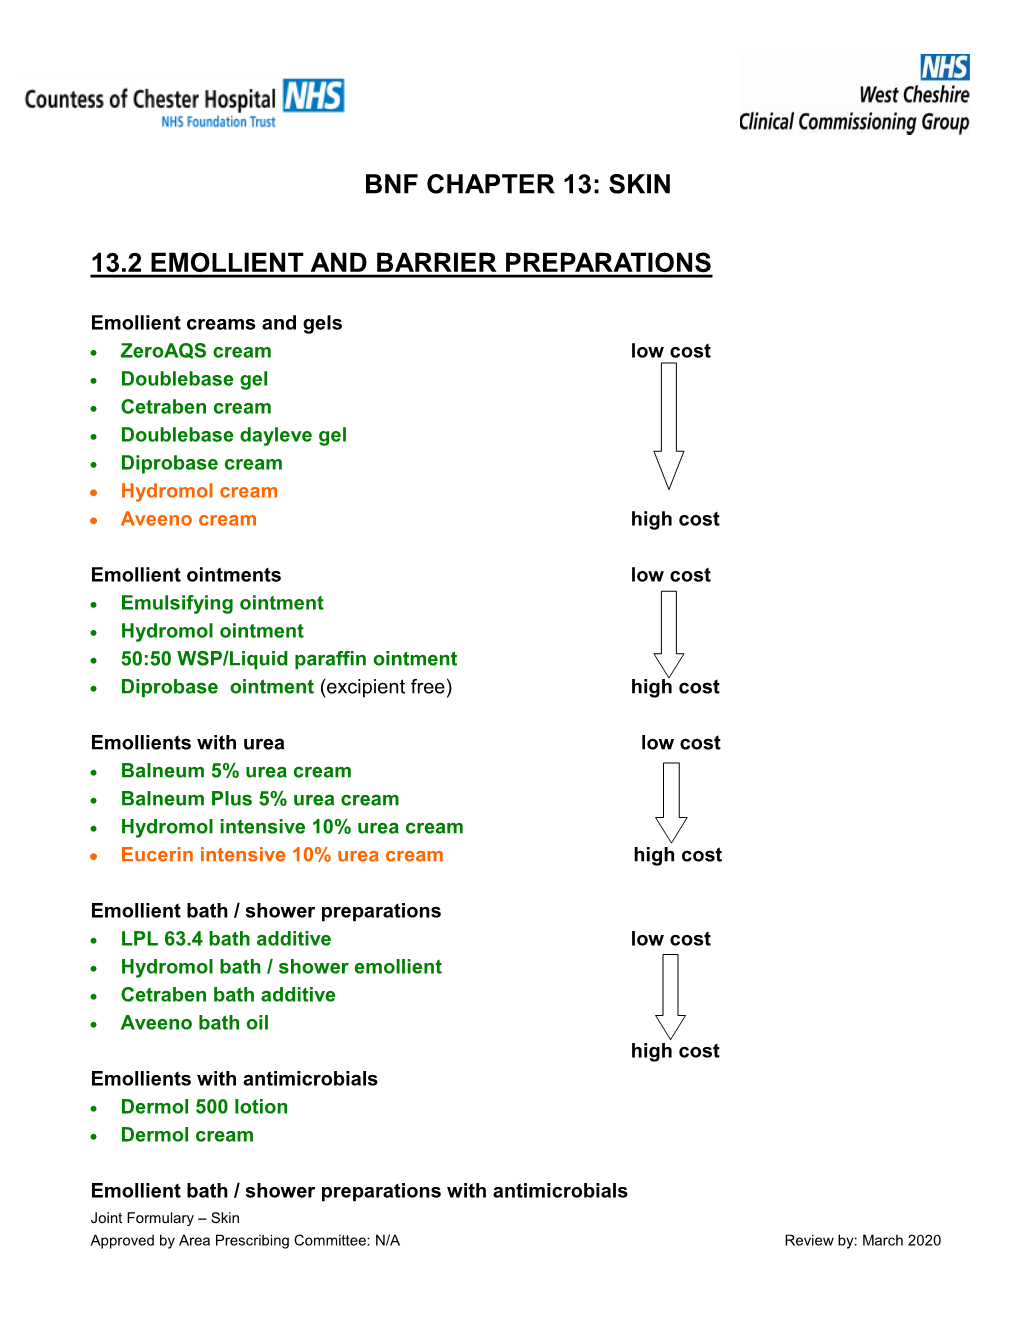 Skin 13.2 Emollient and Barrier Preparations